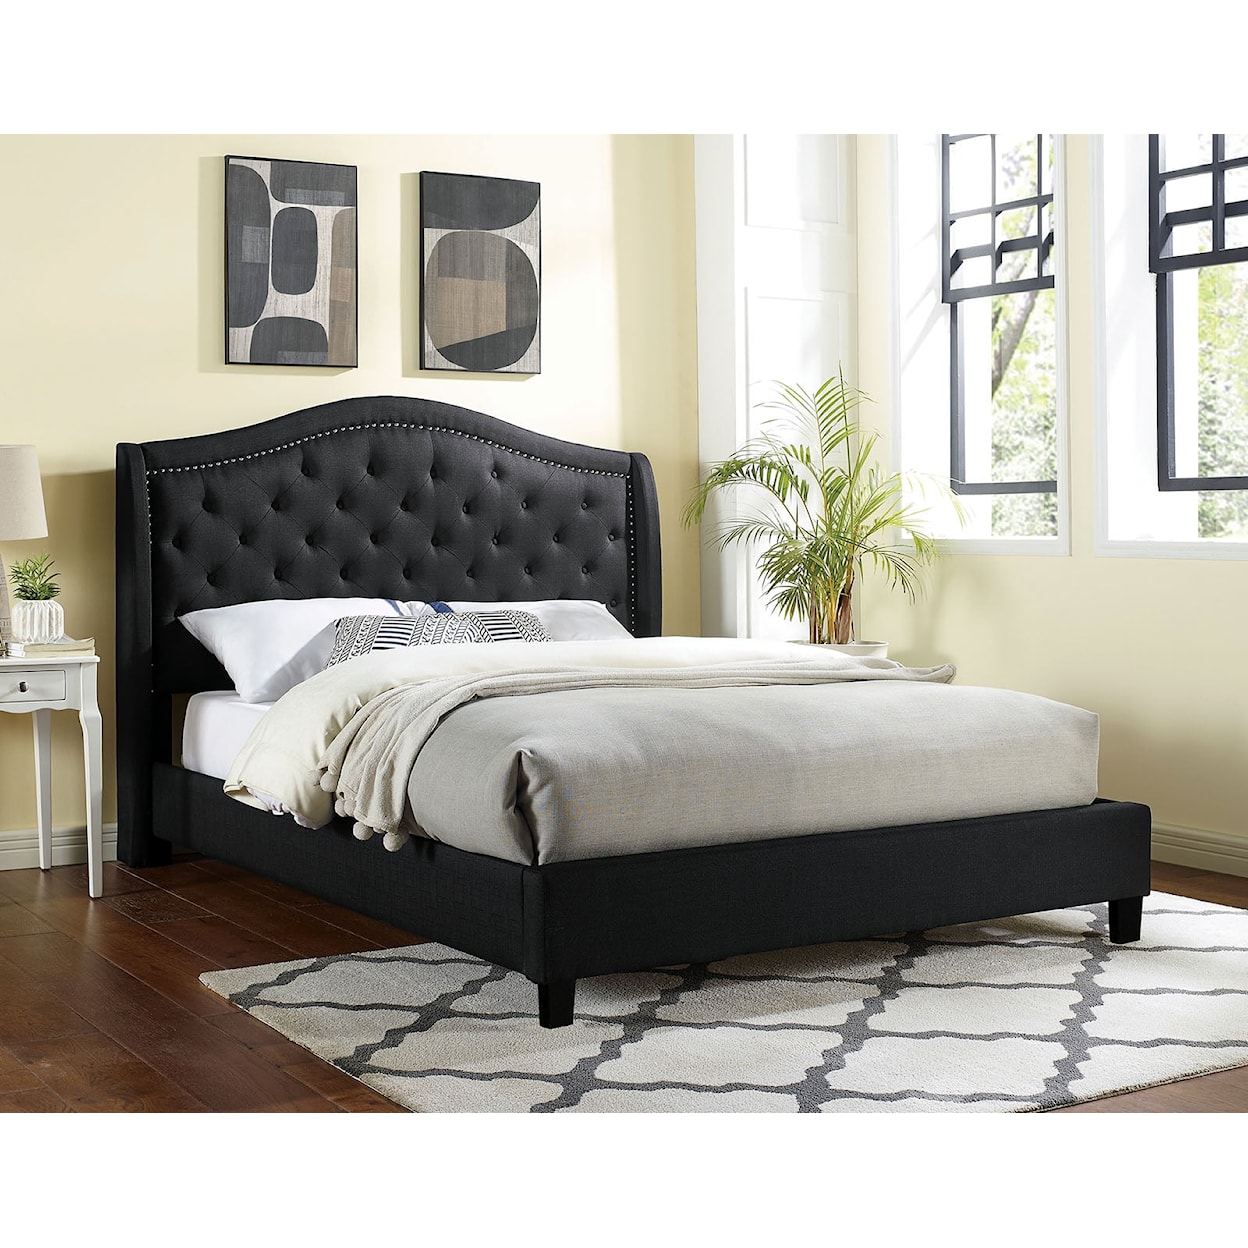 Furniture of America Carly Full Bed, Black